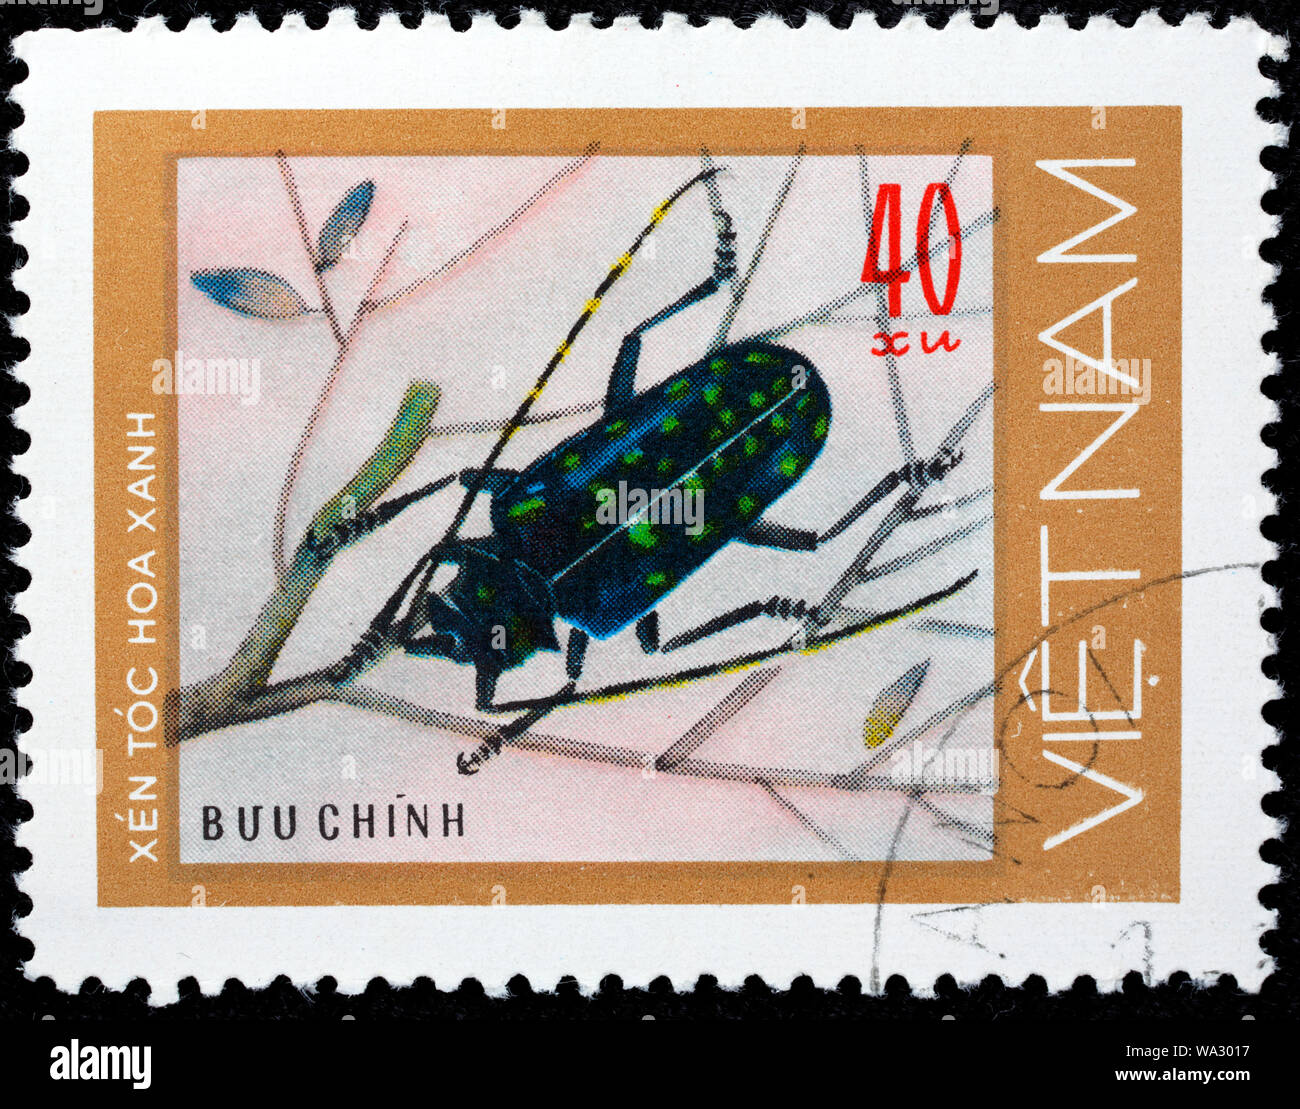 Verde-spotted Capricorno beetle, Cerambyx, francobollo, Vietnam, 1977 Foto Stock